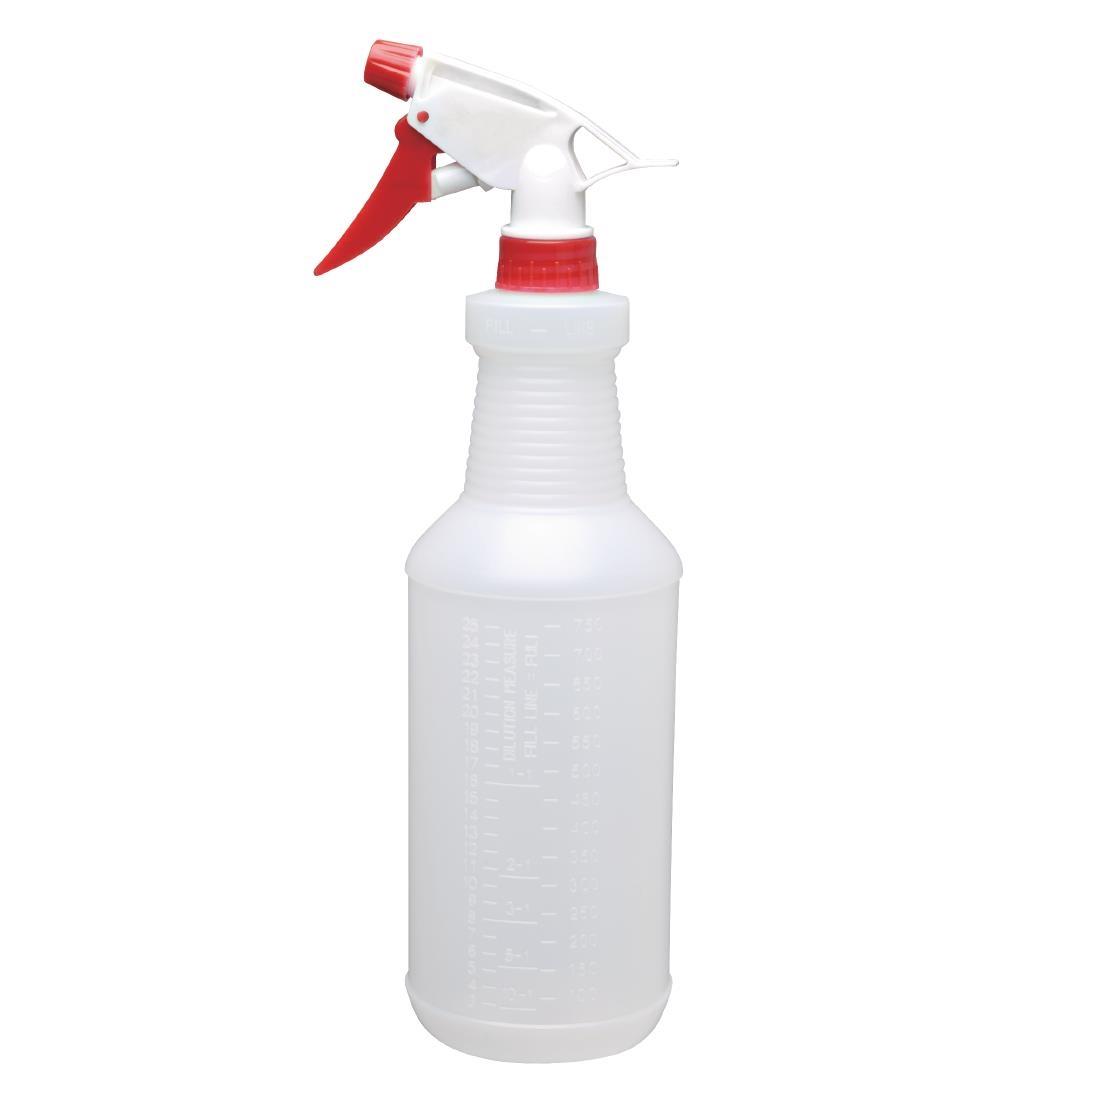 Jantex Colour-Coded Trigger Spray Bottle Red 750ml - CD815  - 1